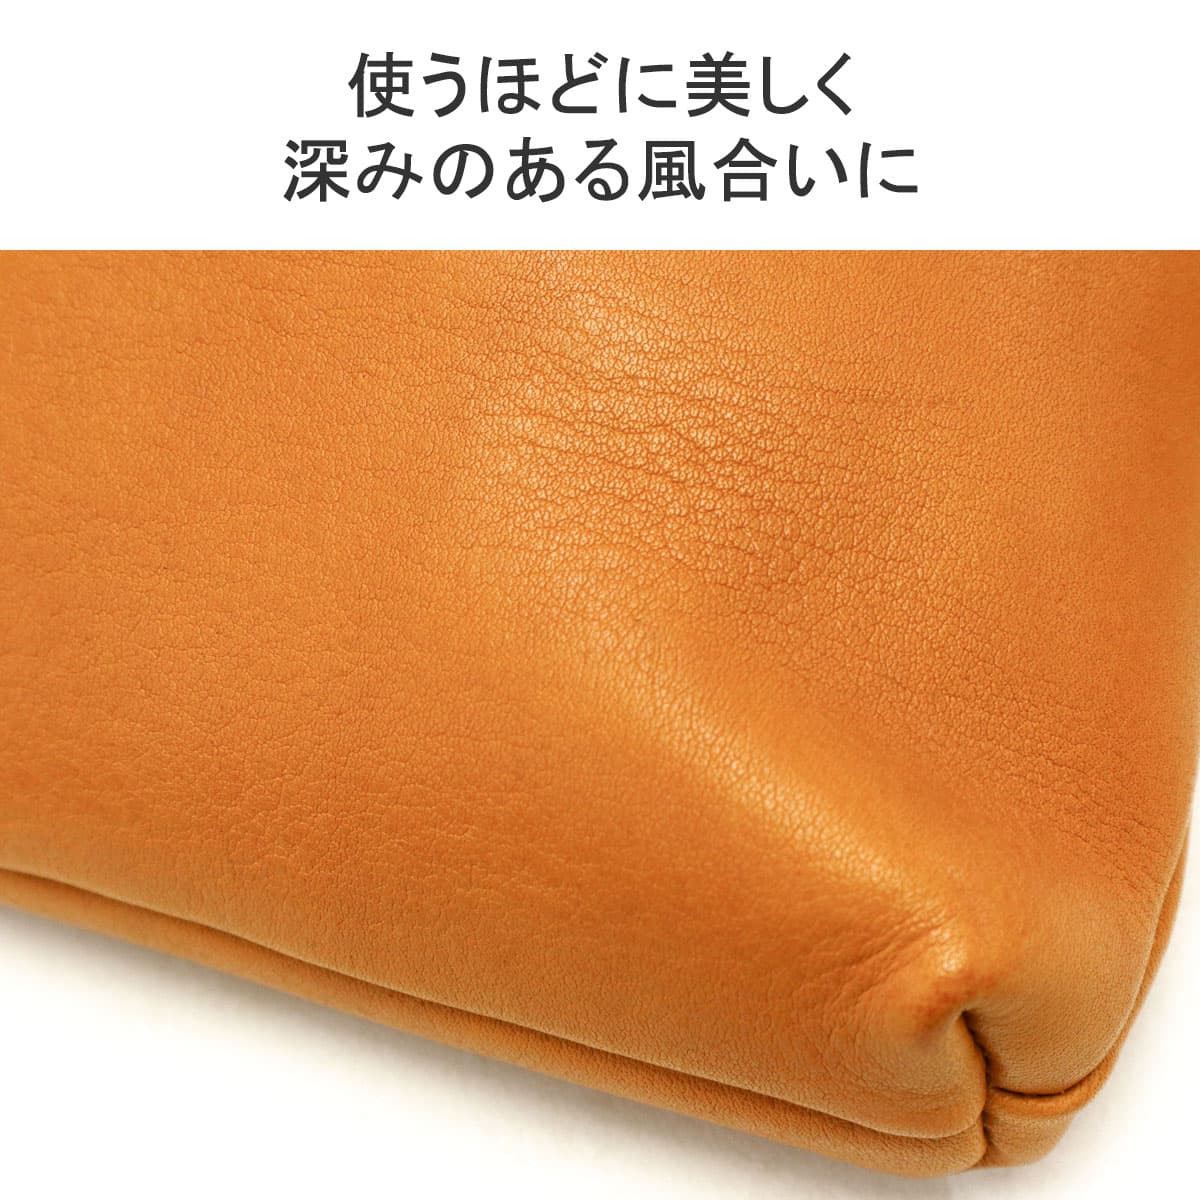 SLOW スロウ bono flap waist bag ショルダーバッグ 858S15LG｜【正規